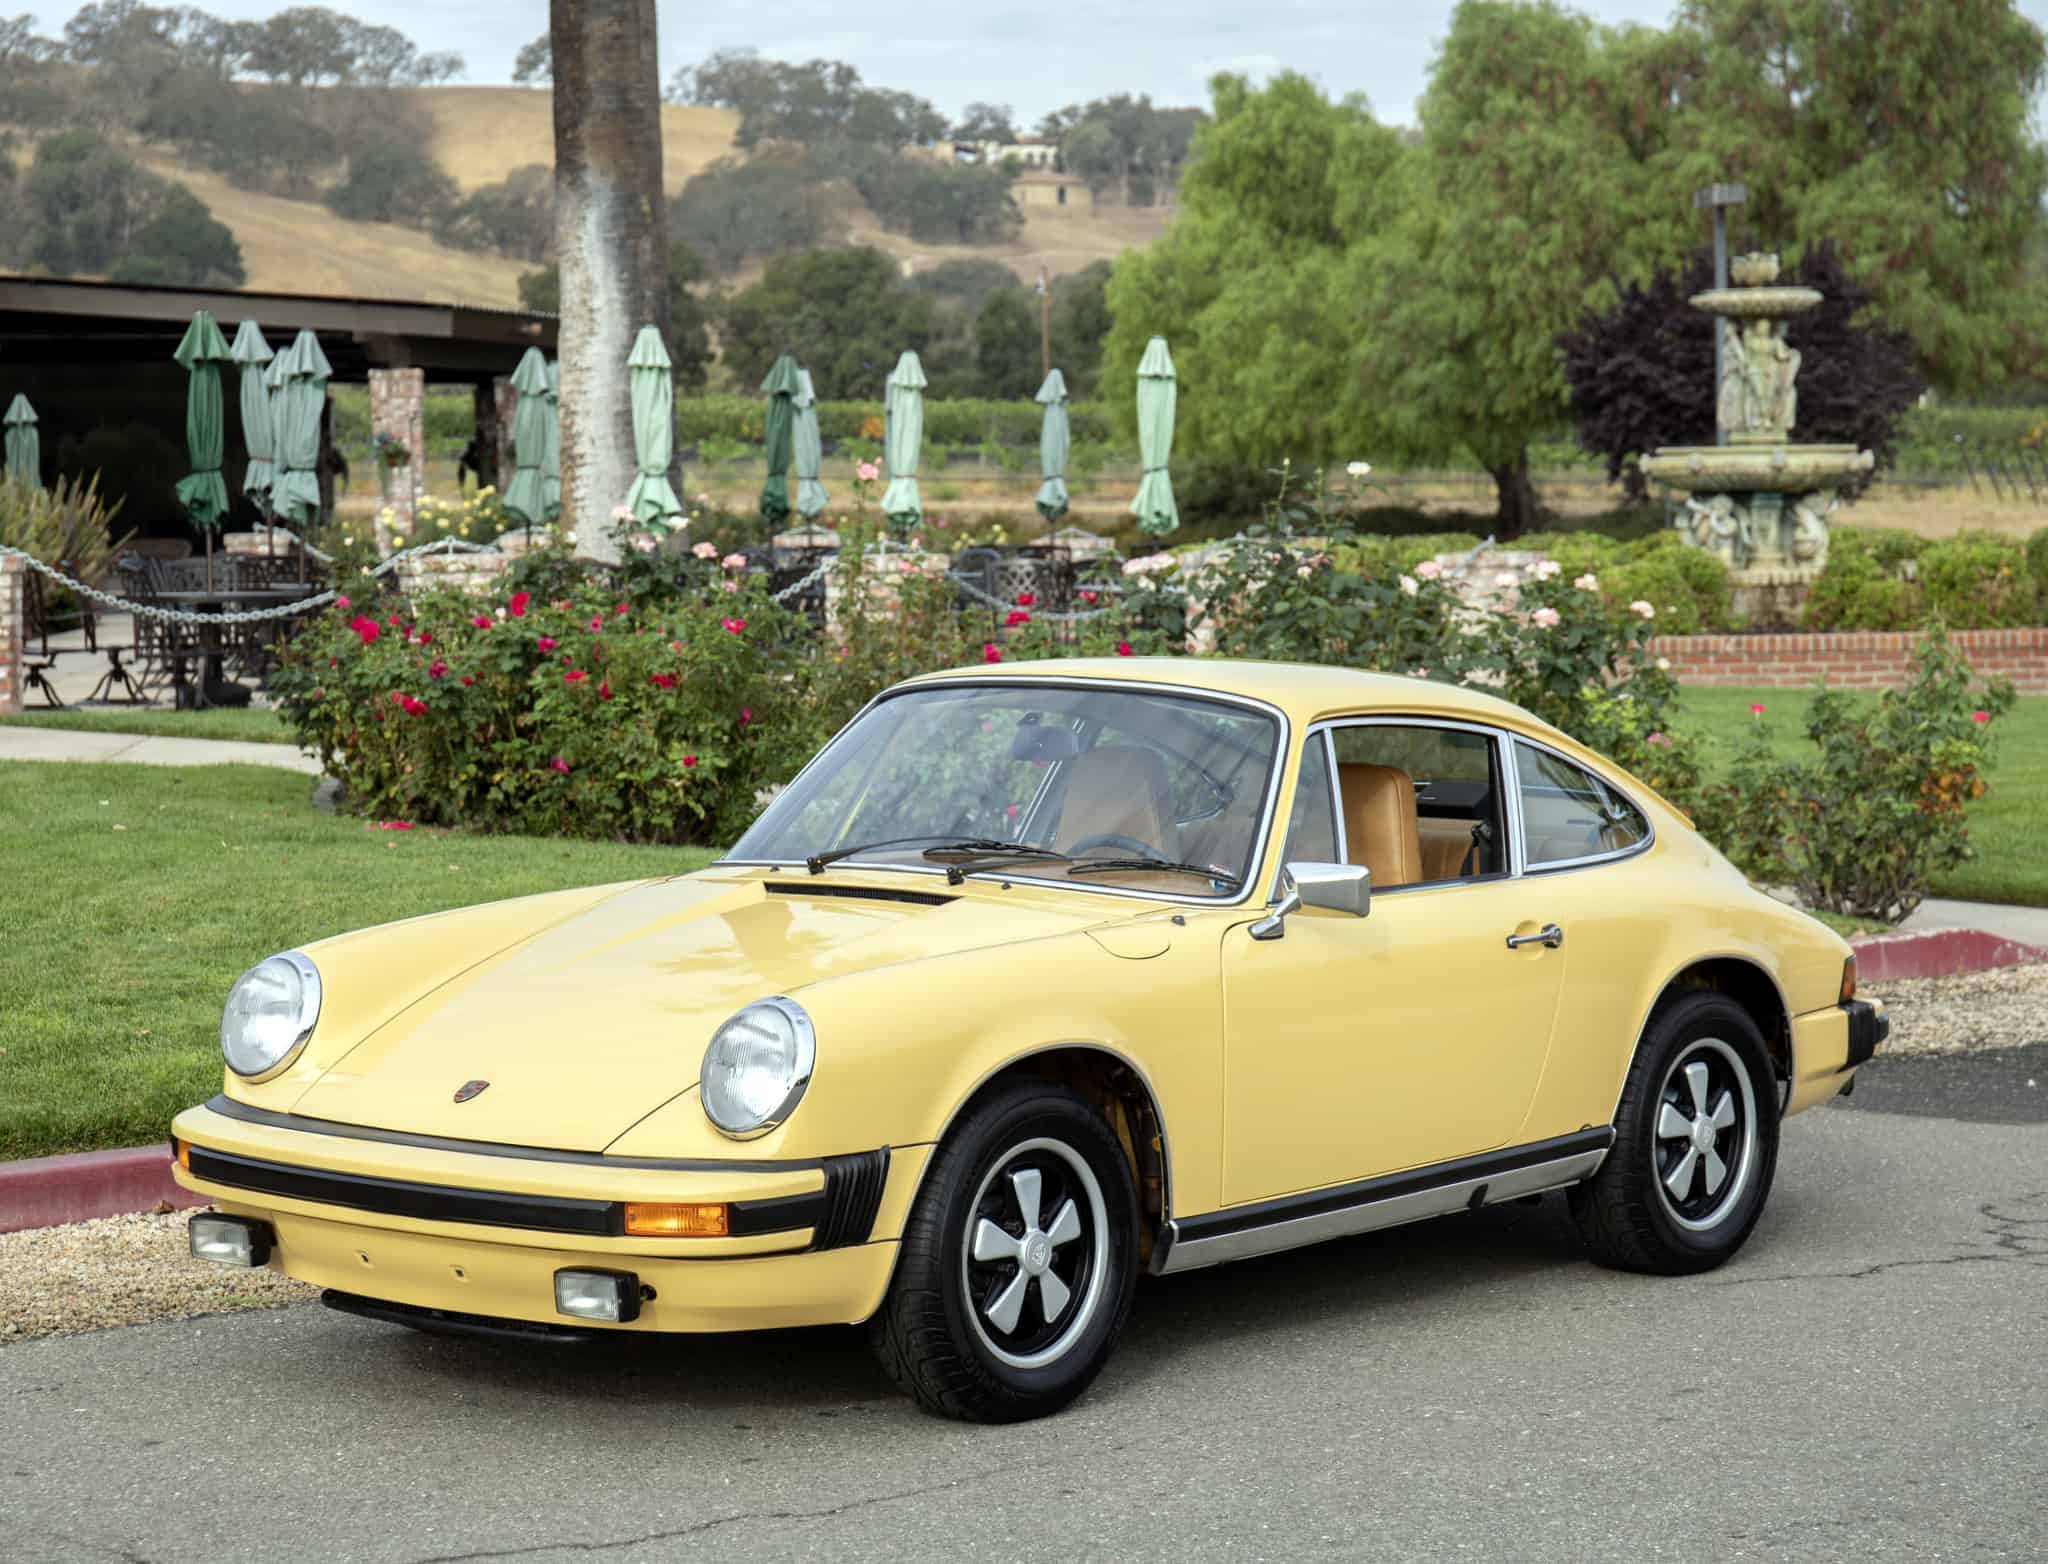 Valuation of a classic car such as a Porsche 911